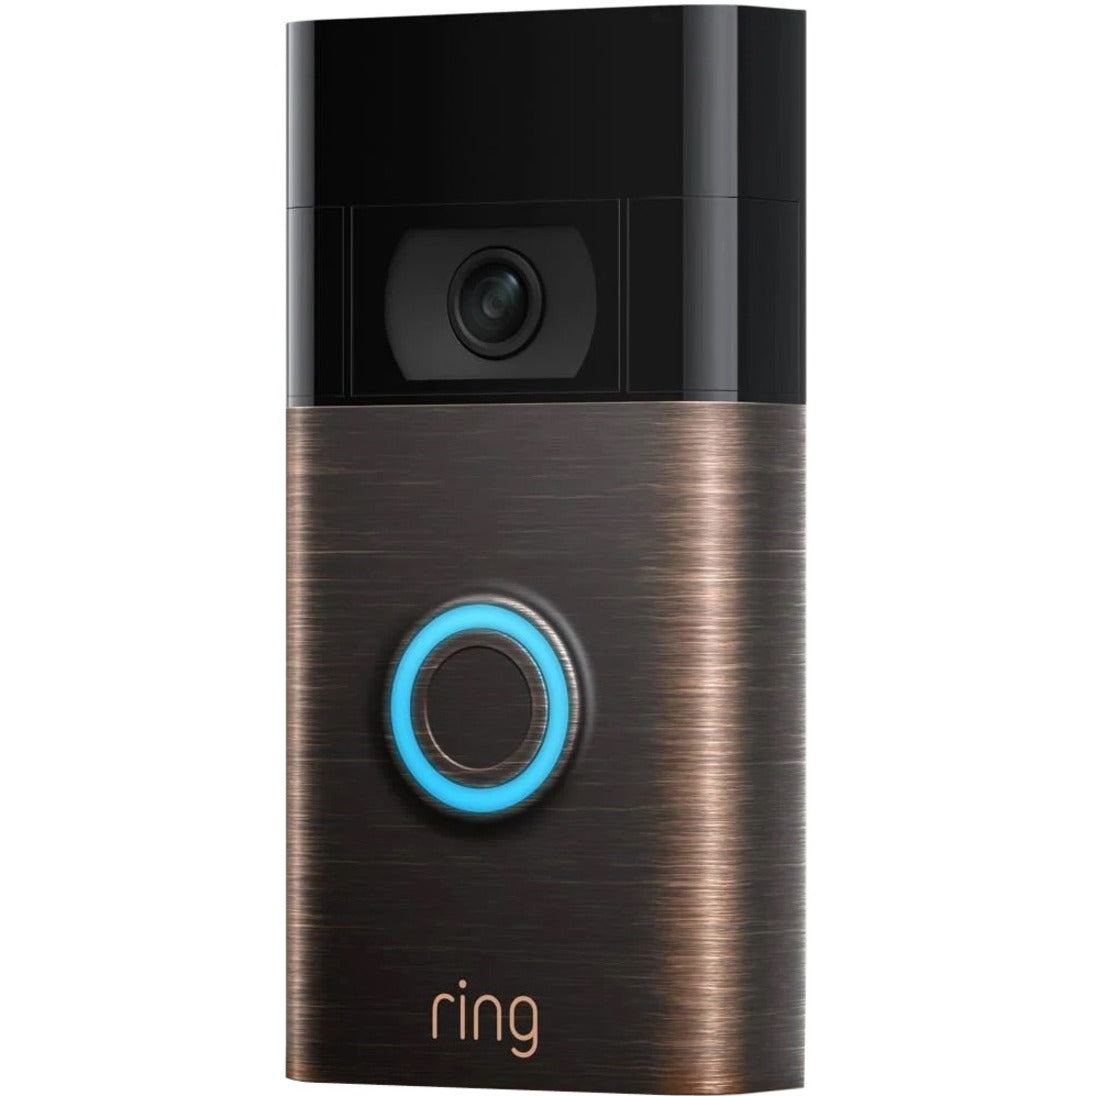 Ring B08N5NQ869 Video Doorbell, 1080p HD Video, Night Vision, Two-Way Audio